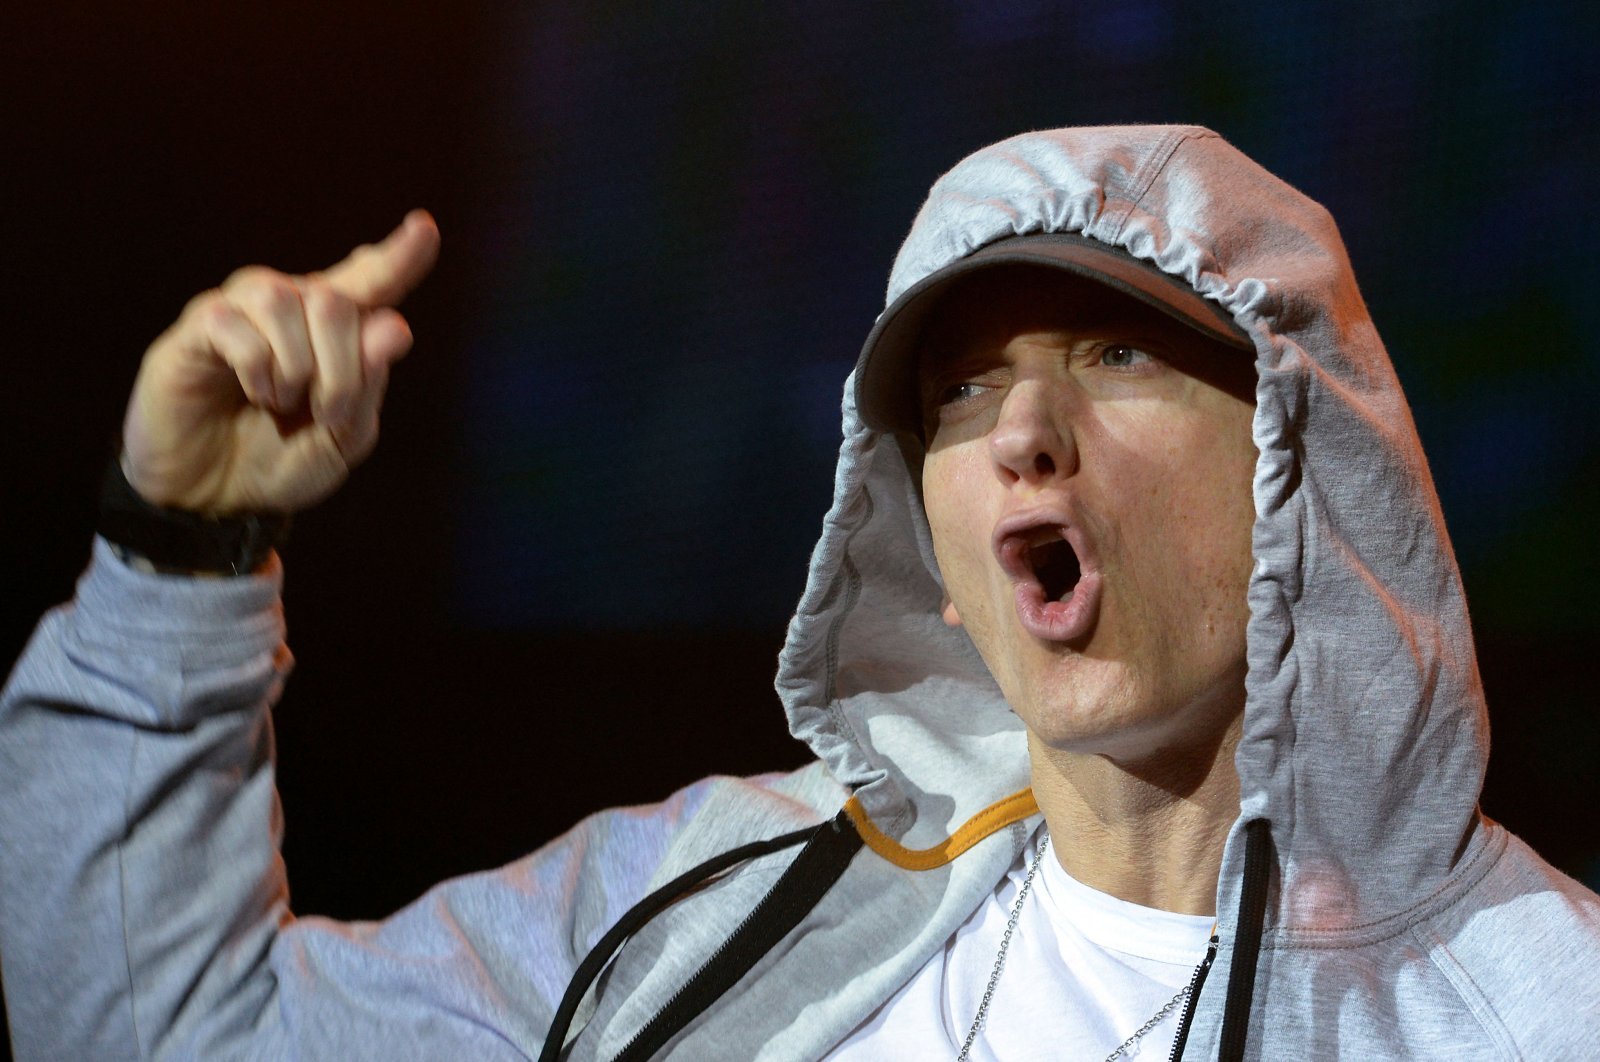 U.S. rapper Eminem performs during a concert at the Stade de France in Saints-Denis, near Paris, France, Aug. 22, 2013. (AFP Photo)